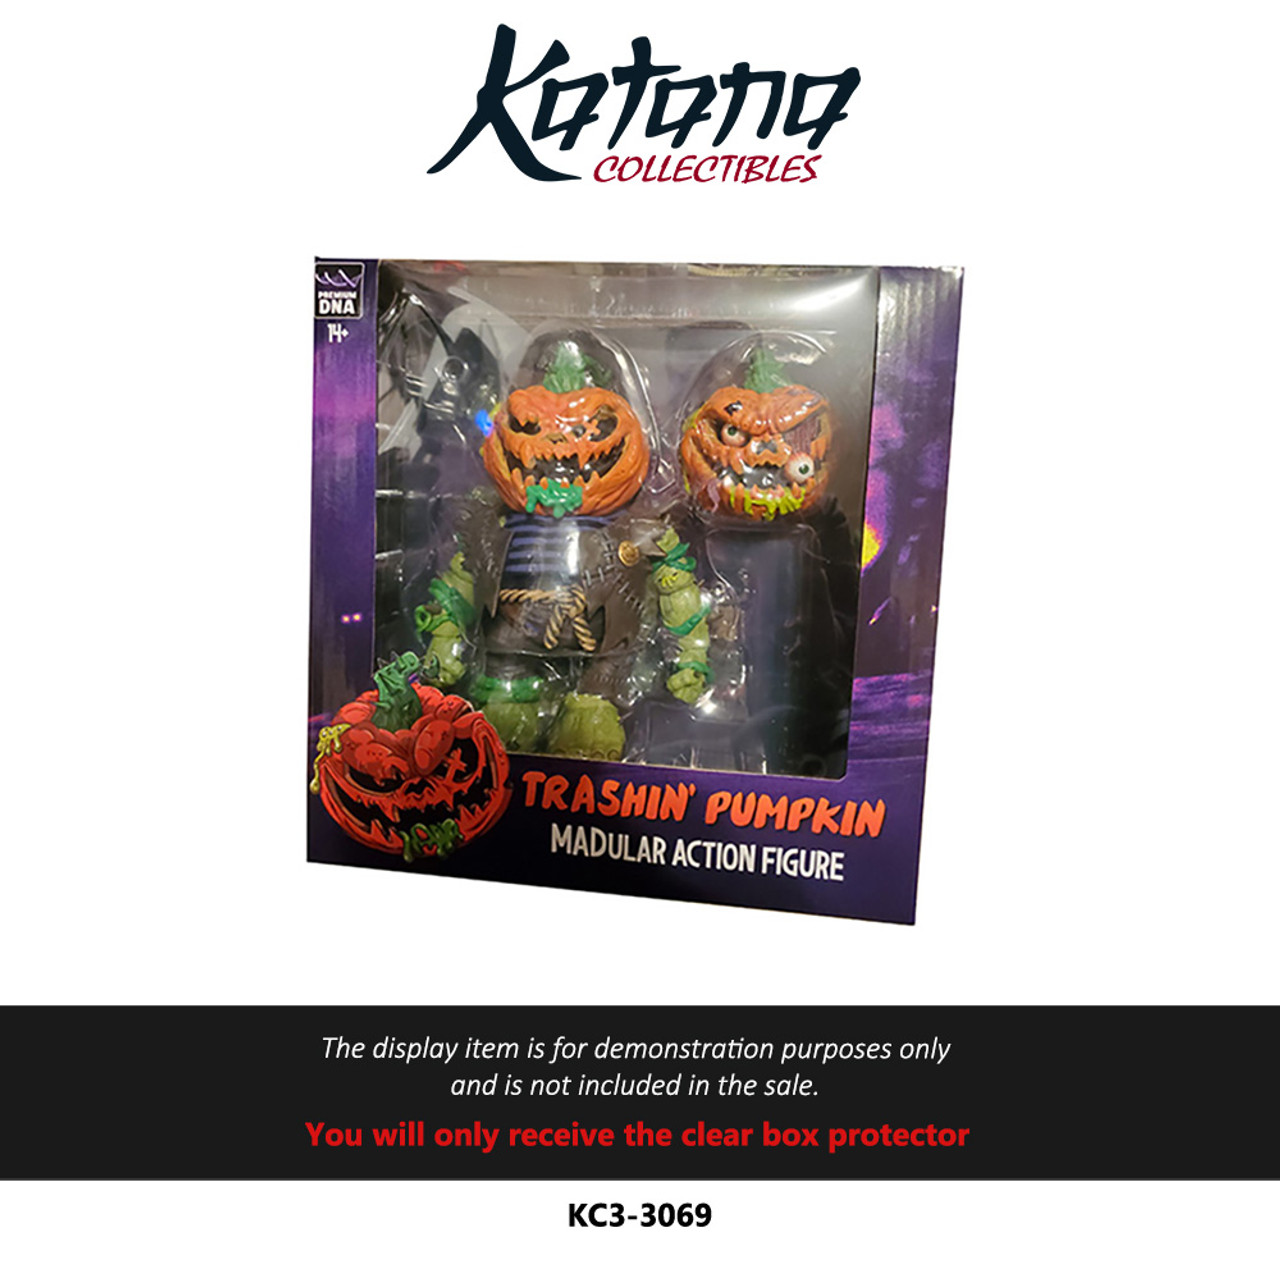 Katana Collectibles Protector For Trashin' Pumpkin Madular Action Figure